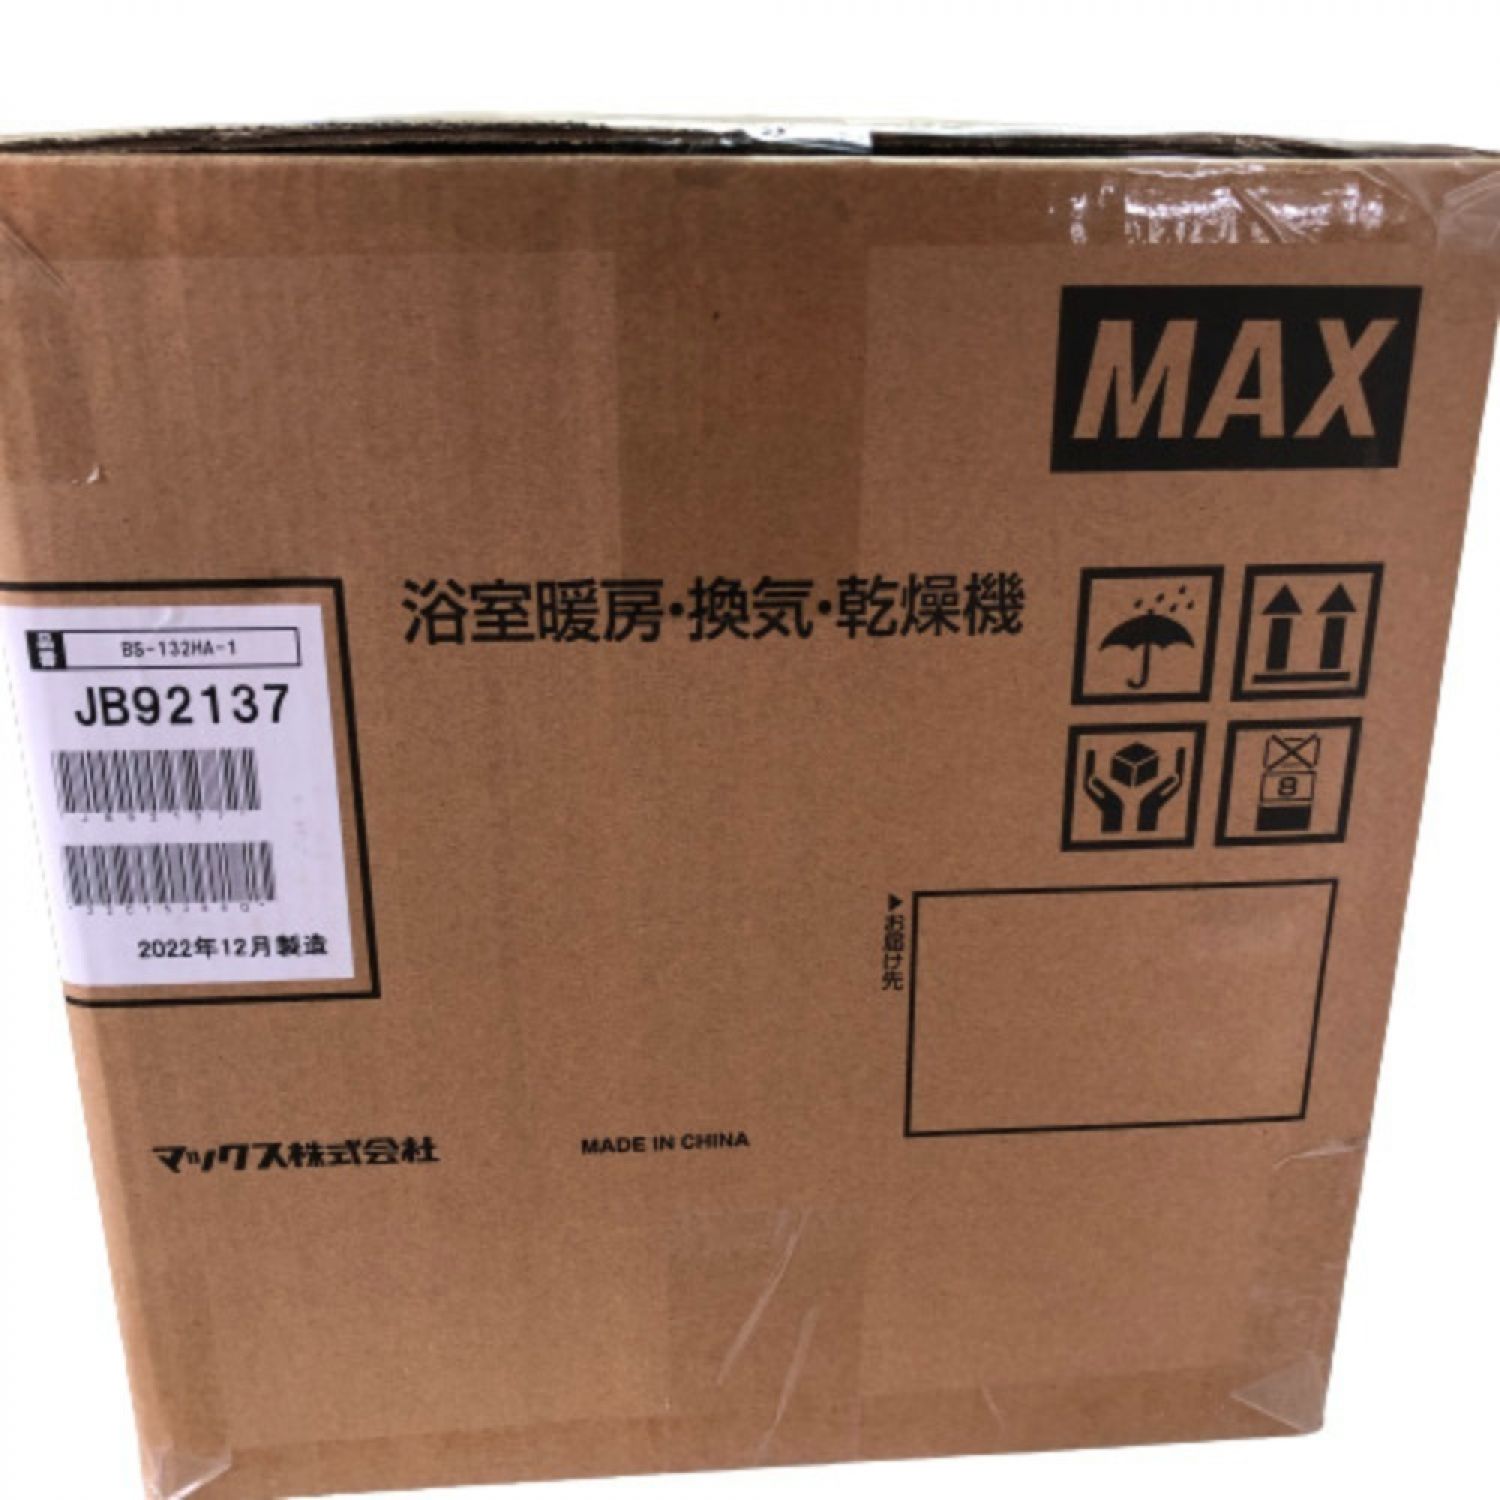 ◇◇MAX マックス ドライファン 浴室暖房/換気/乾燥機 BS-132HA-1